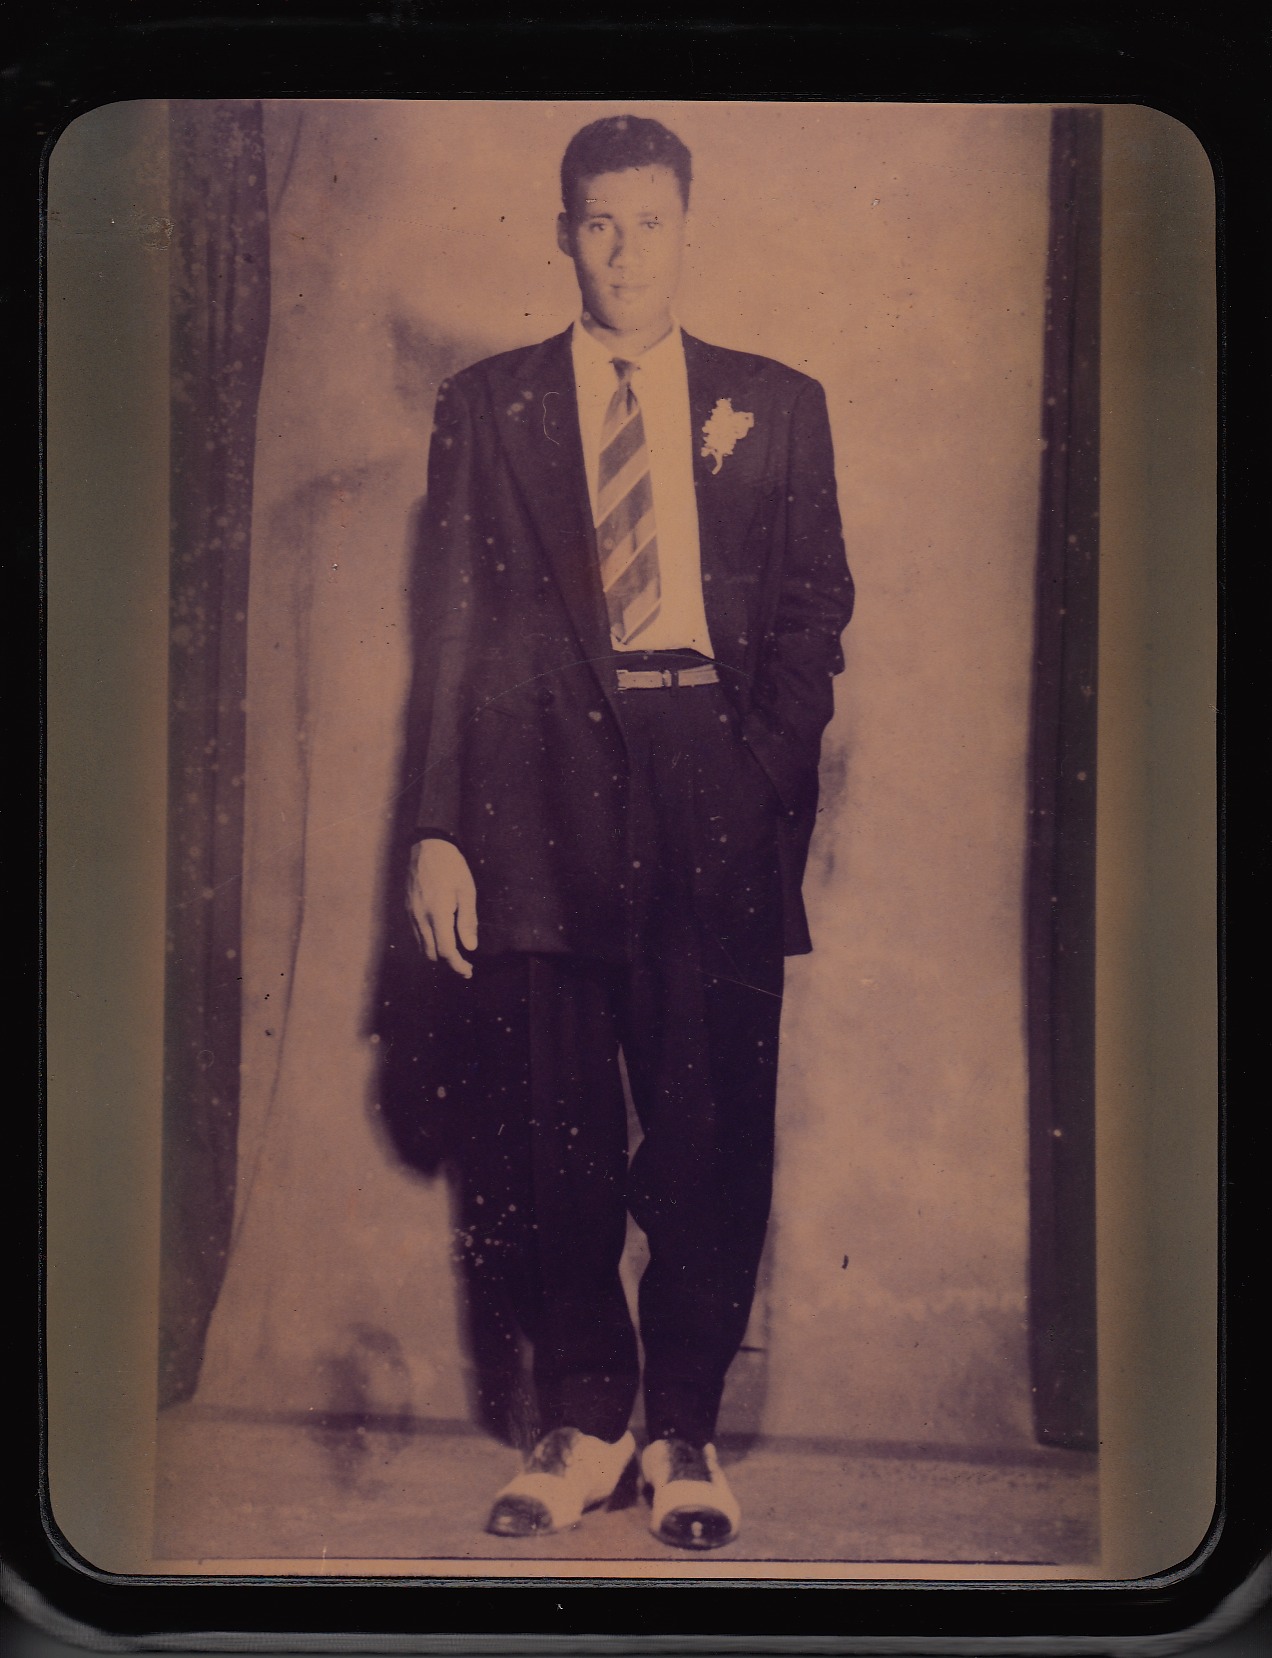   "El dia de mi boda"   1955   I'm wearing a jacket and a necktie, so it must be my wedding.&nbsp;    Persona: Levi Bryant    Colaborador: Levi Bryant  CC_001_014  